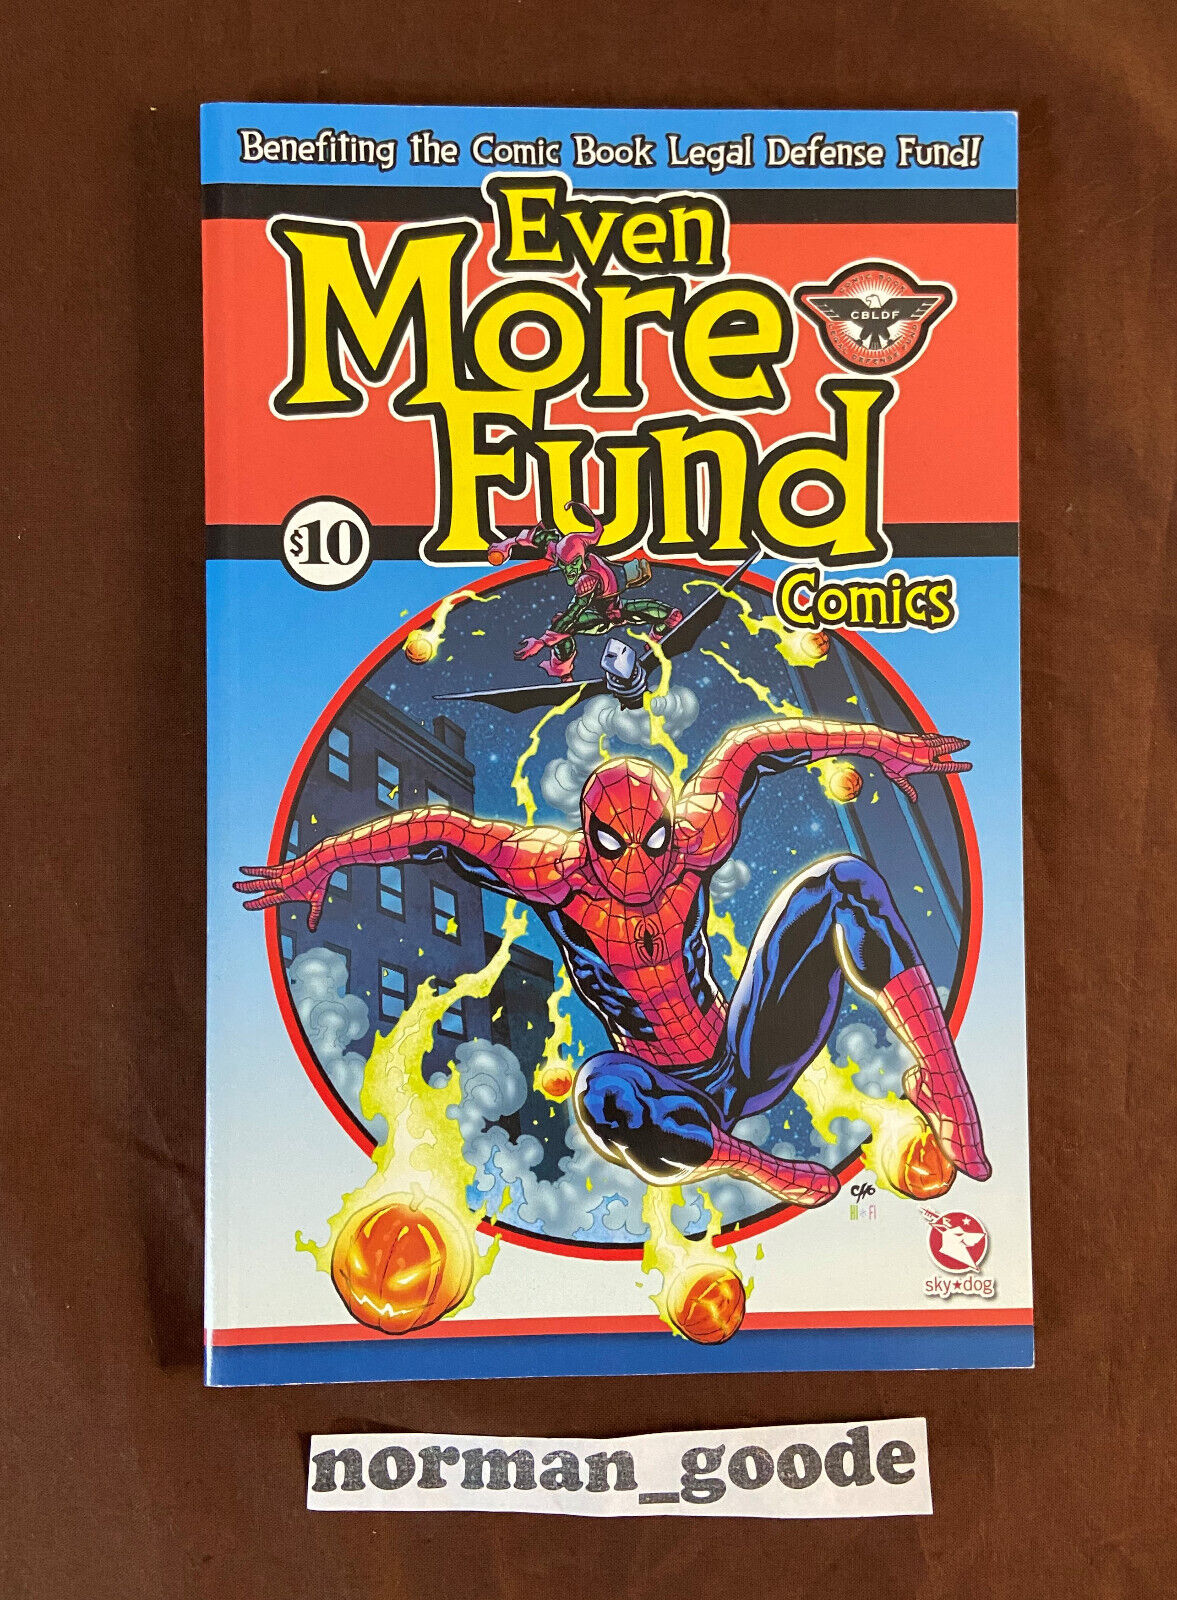 Even More Fund Comics - Comic Book Legal Defense Fund *NEW* Trade Paperback